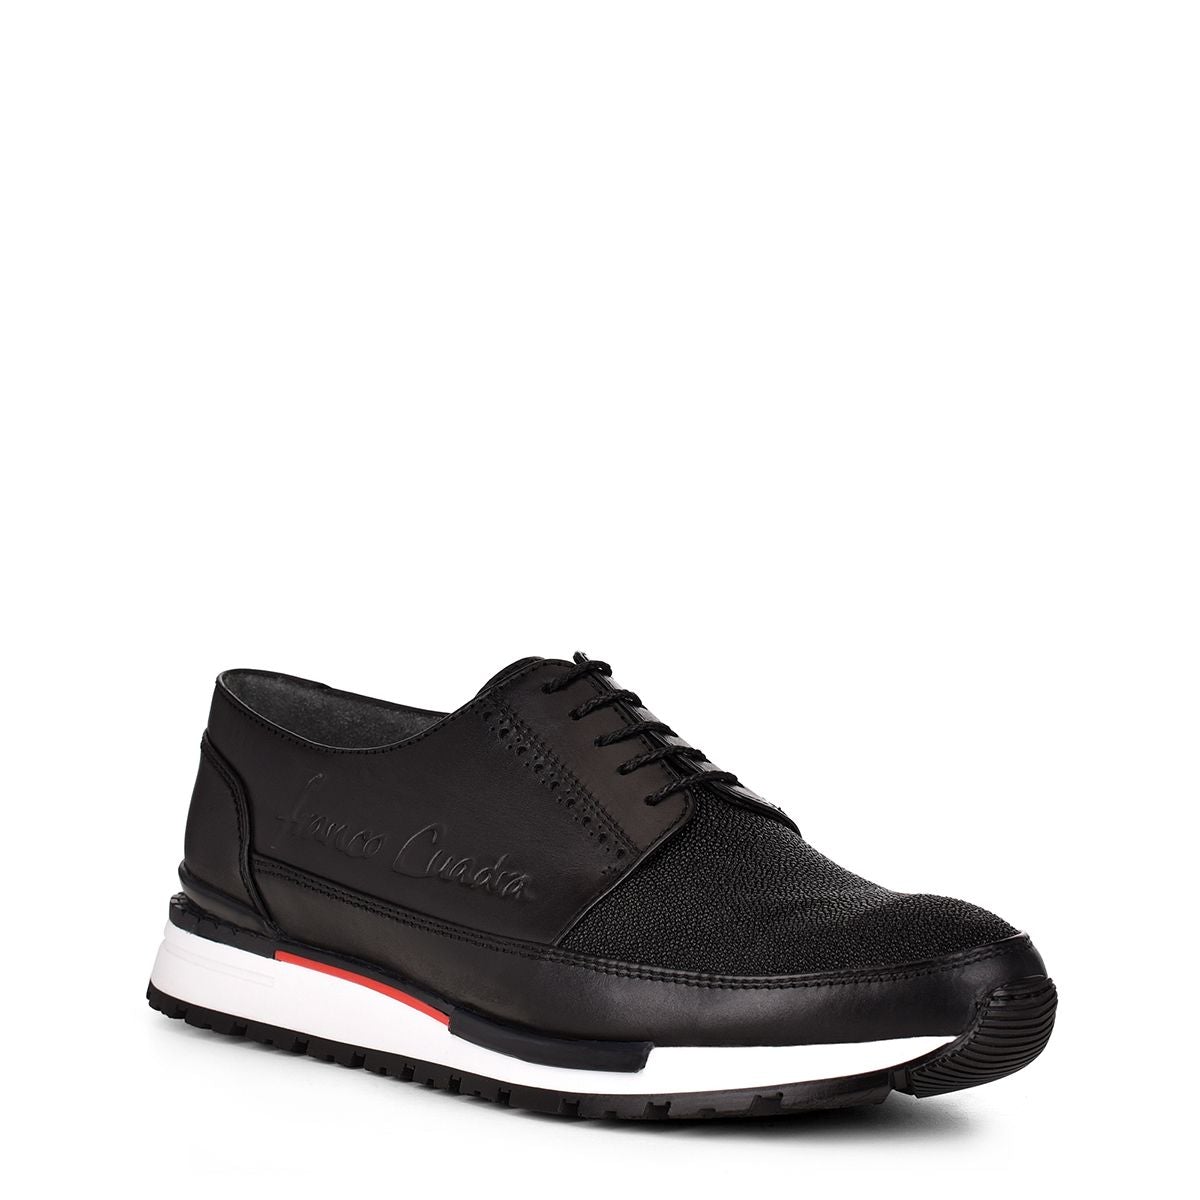 127MTTS - Cuadra black casual fashion stingray derby sneakers for men-Kuet.us